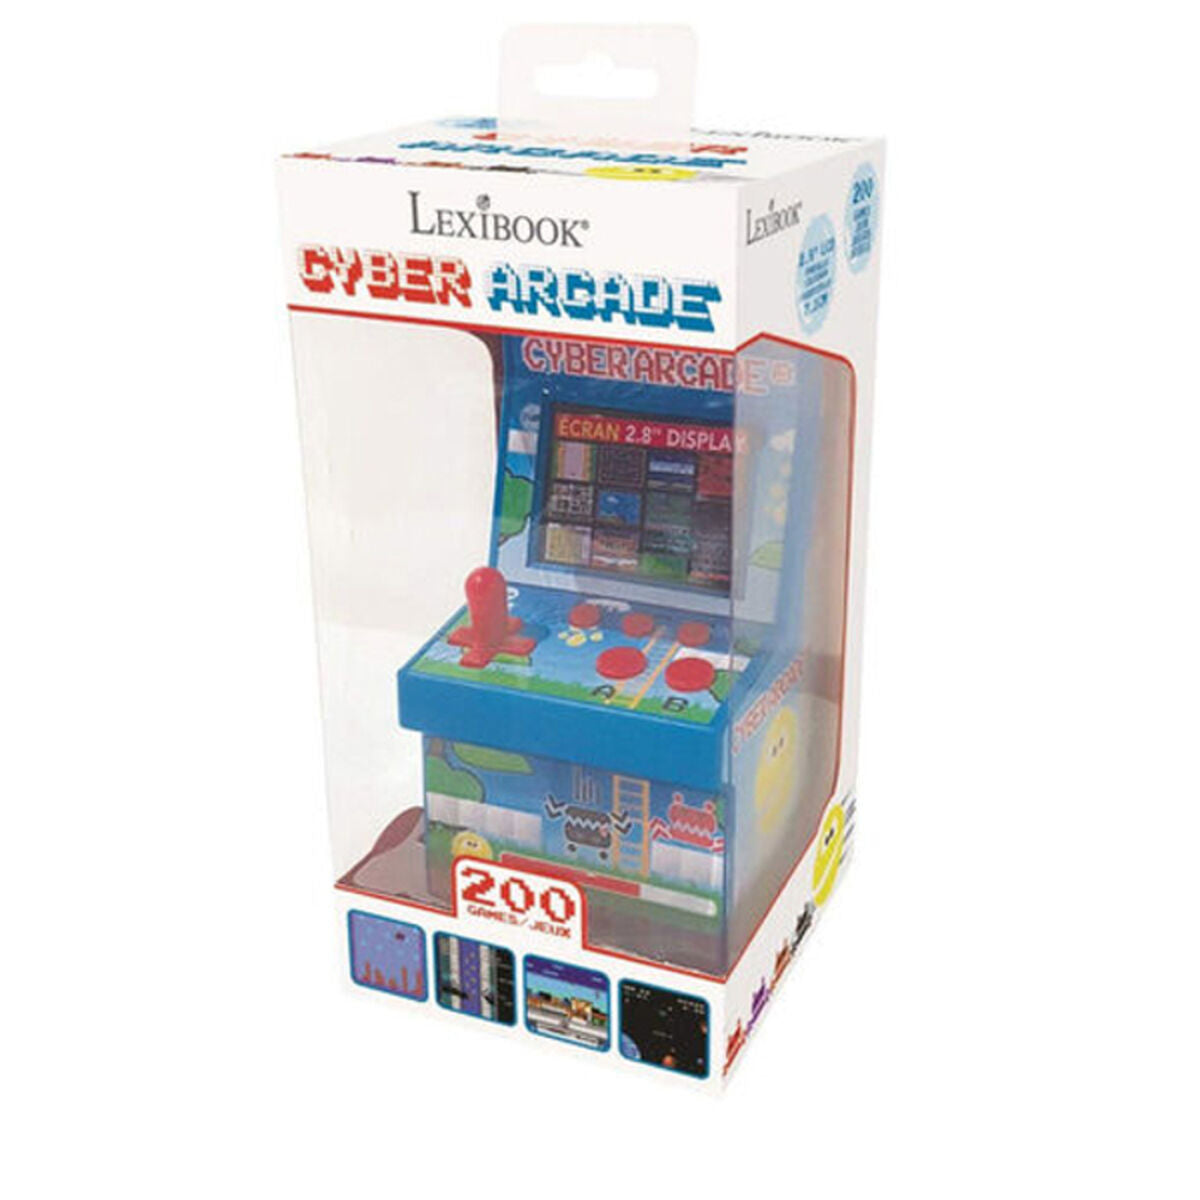 Konsole Cyber Arcade 200 Games Lexibook JL2940 LCD 2,5" - CA International 